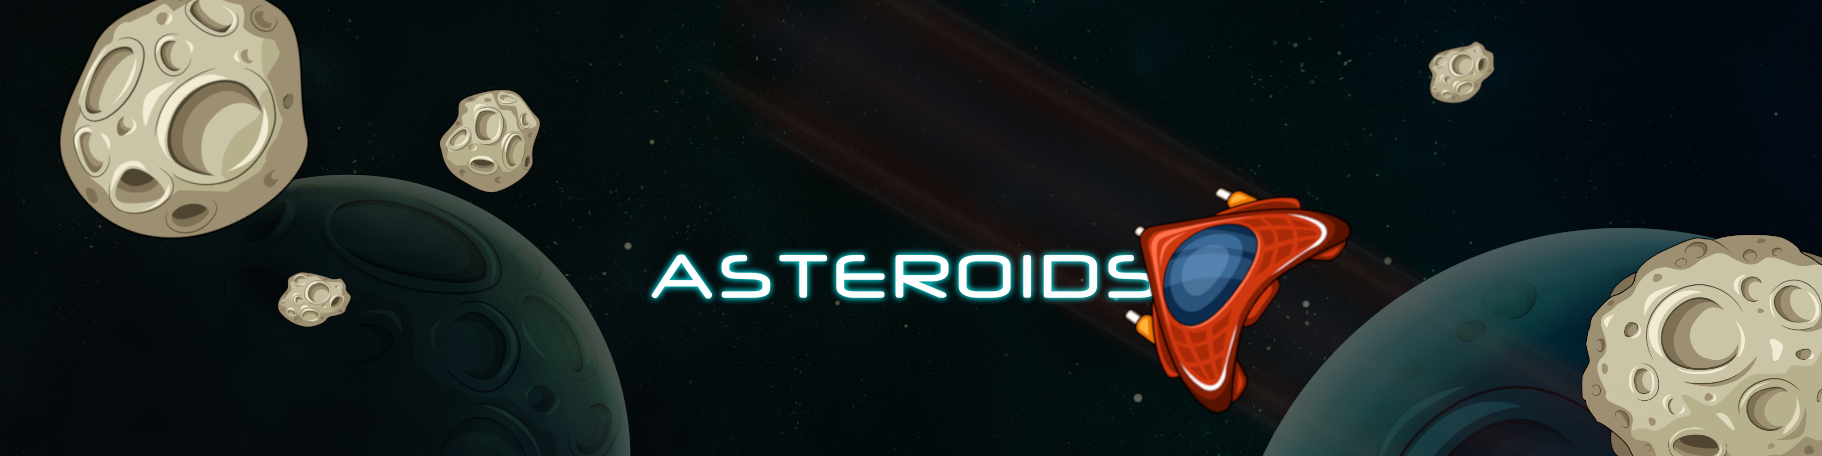 Go Asteroids